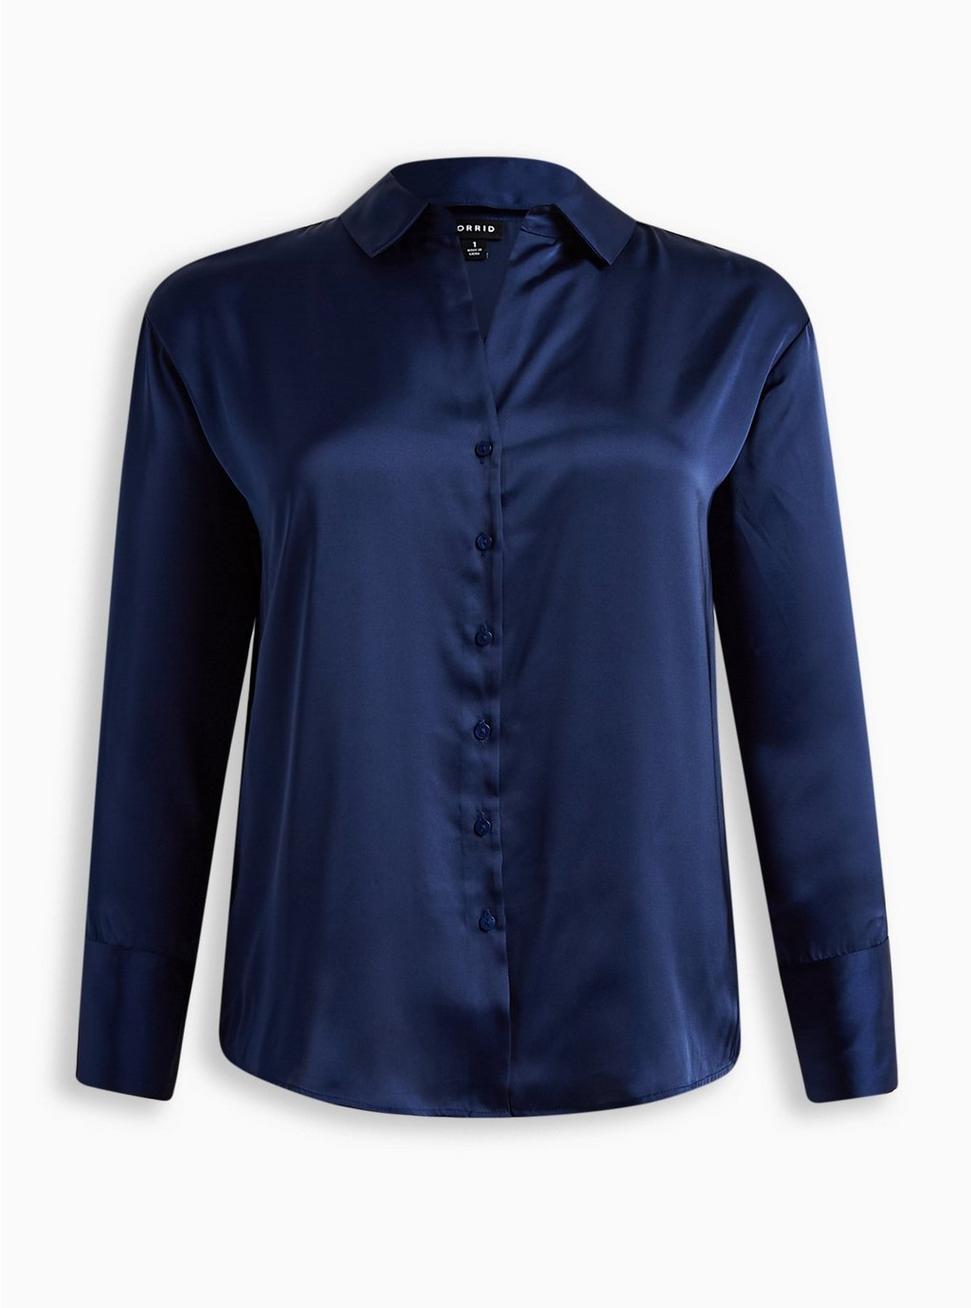 Satin Button Up Long Sleeve Shirt, MIDNIGHT BLUE, hi-res